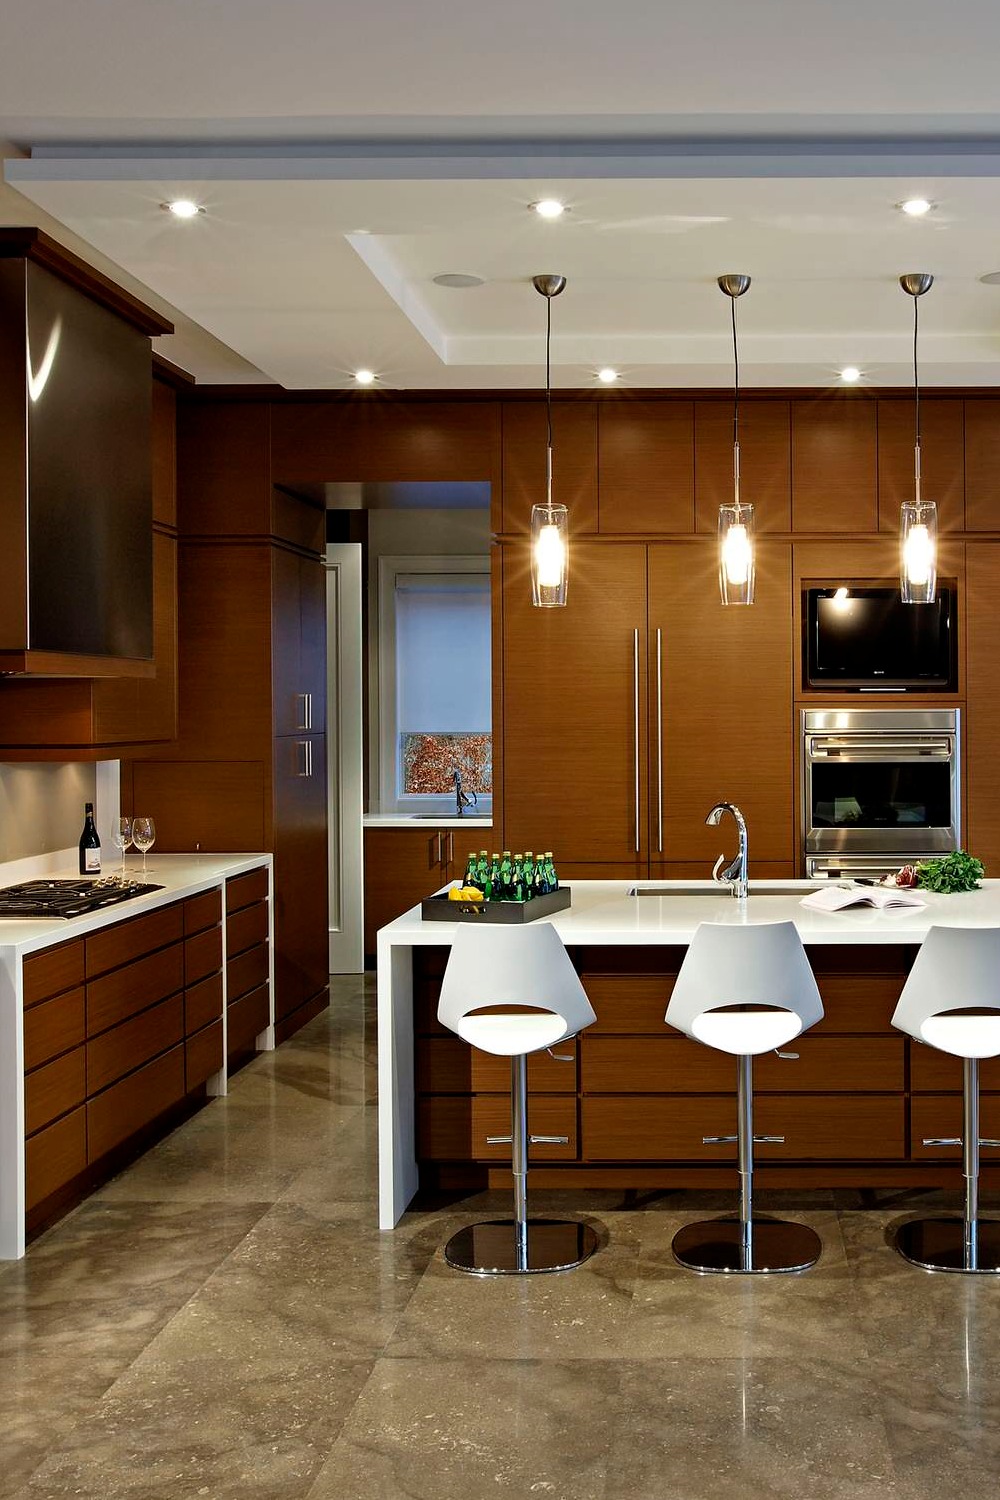 Dark Wood Cabinetry Quartz Counters Large Size Floor Tiles Pendant Lights Dropped Ceiling